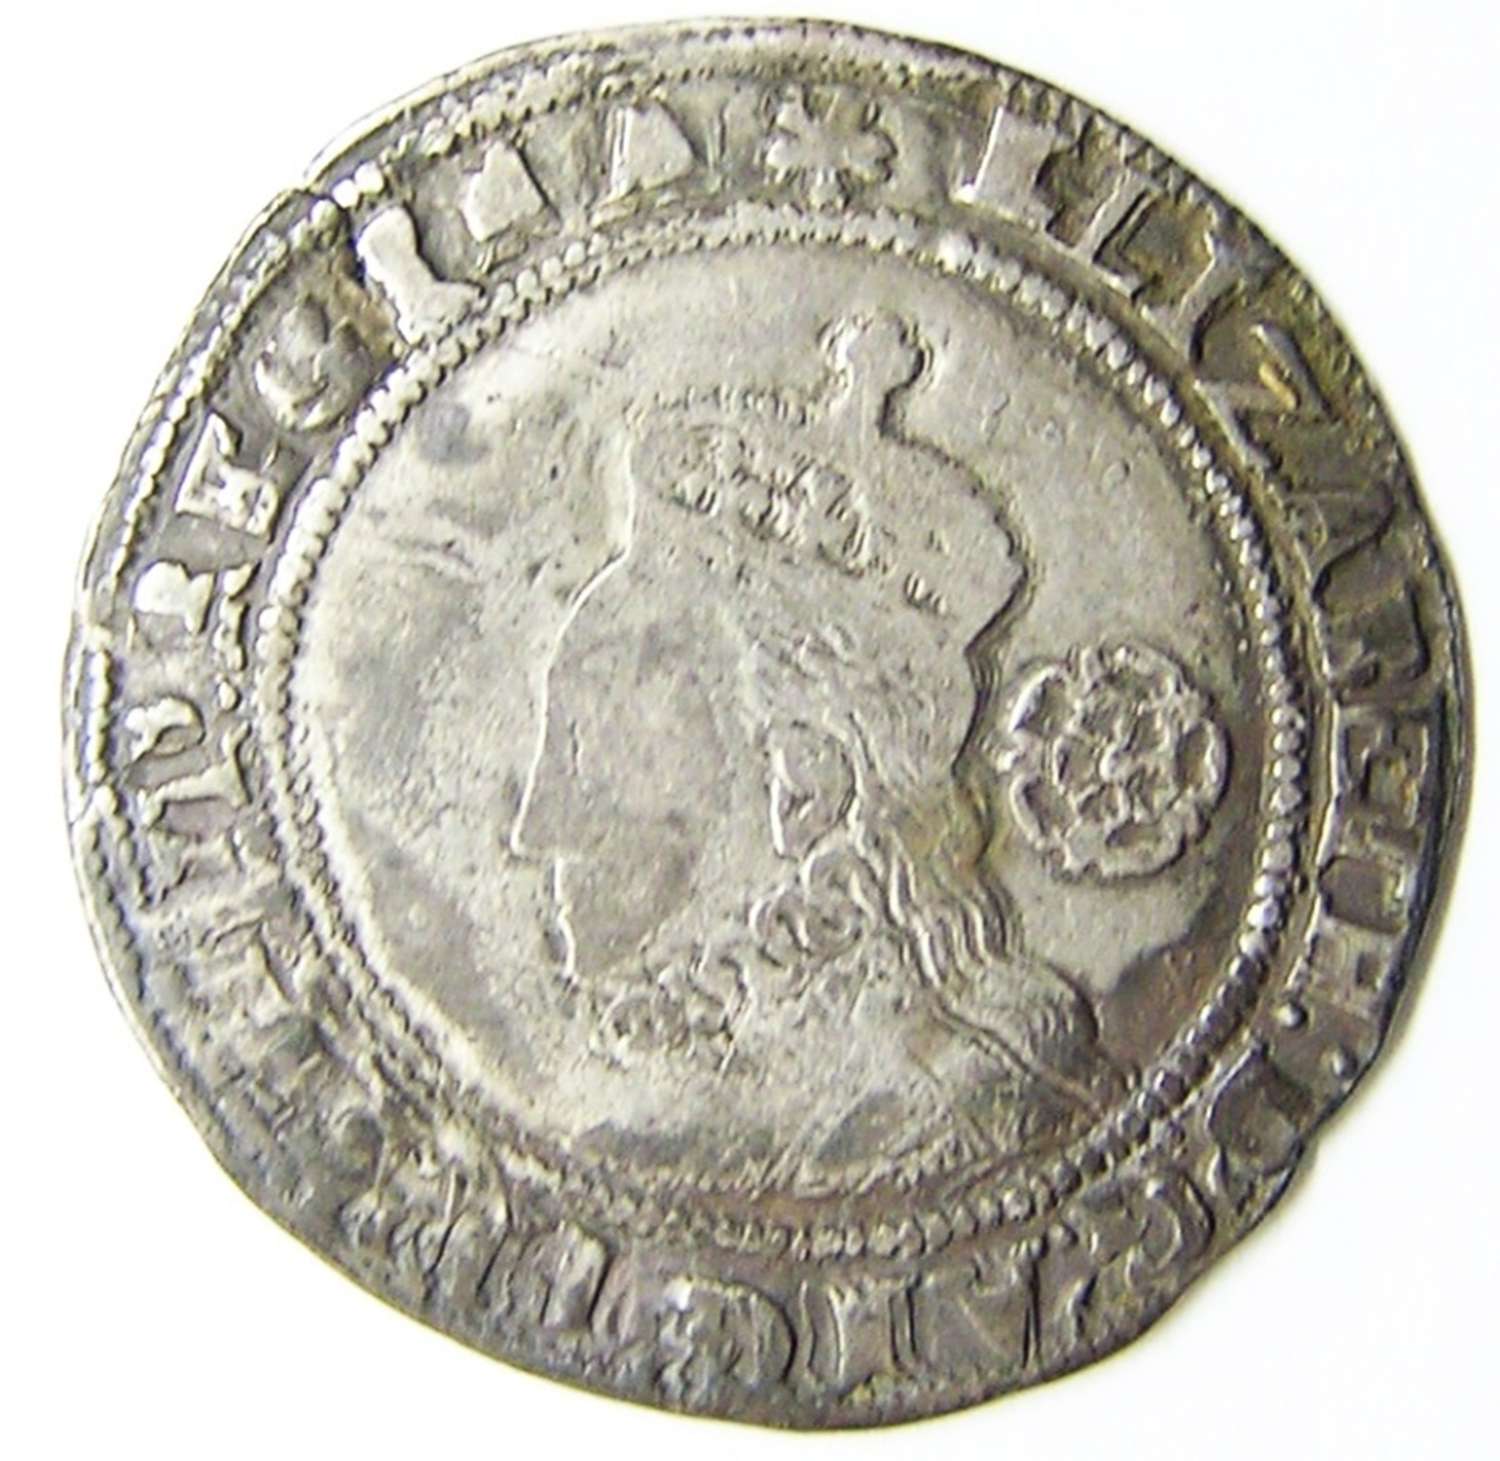 Queen Elizabeth I Tudor Silver Sixpence